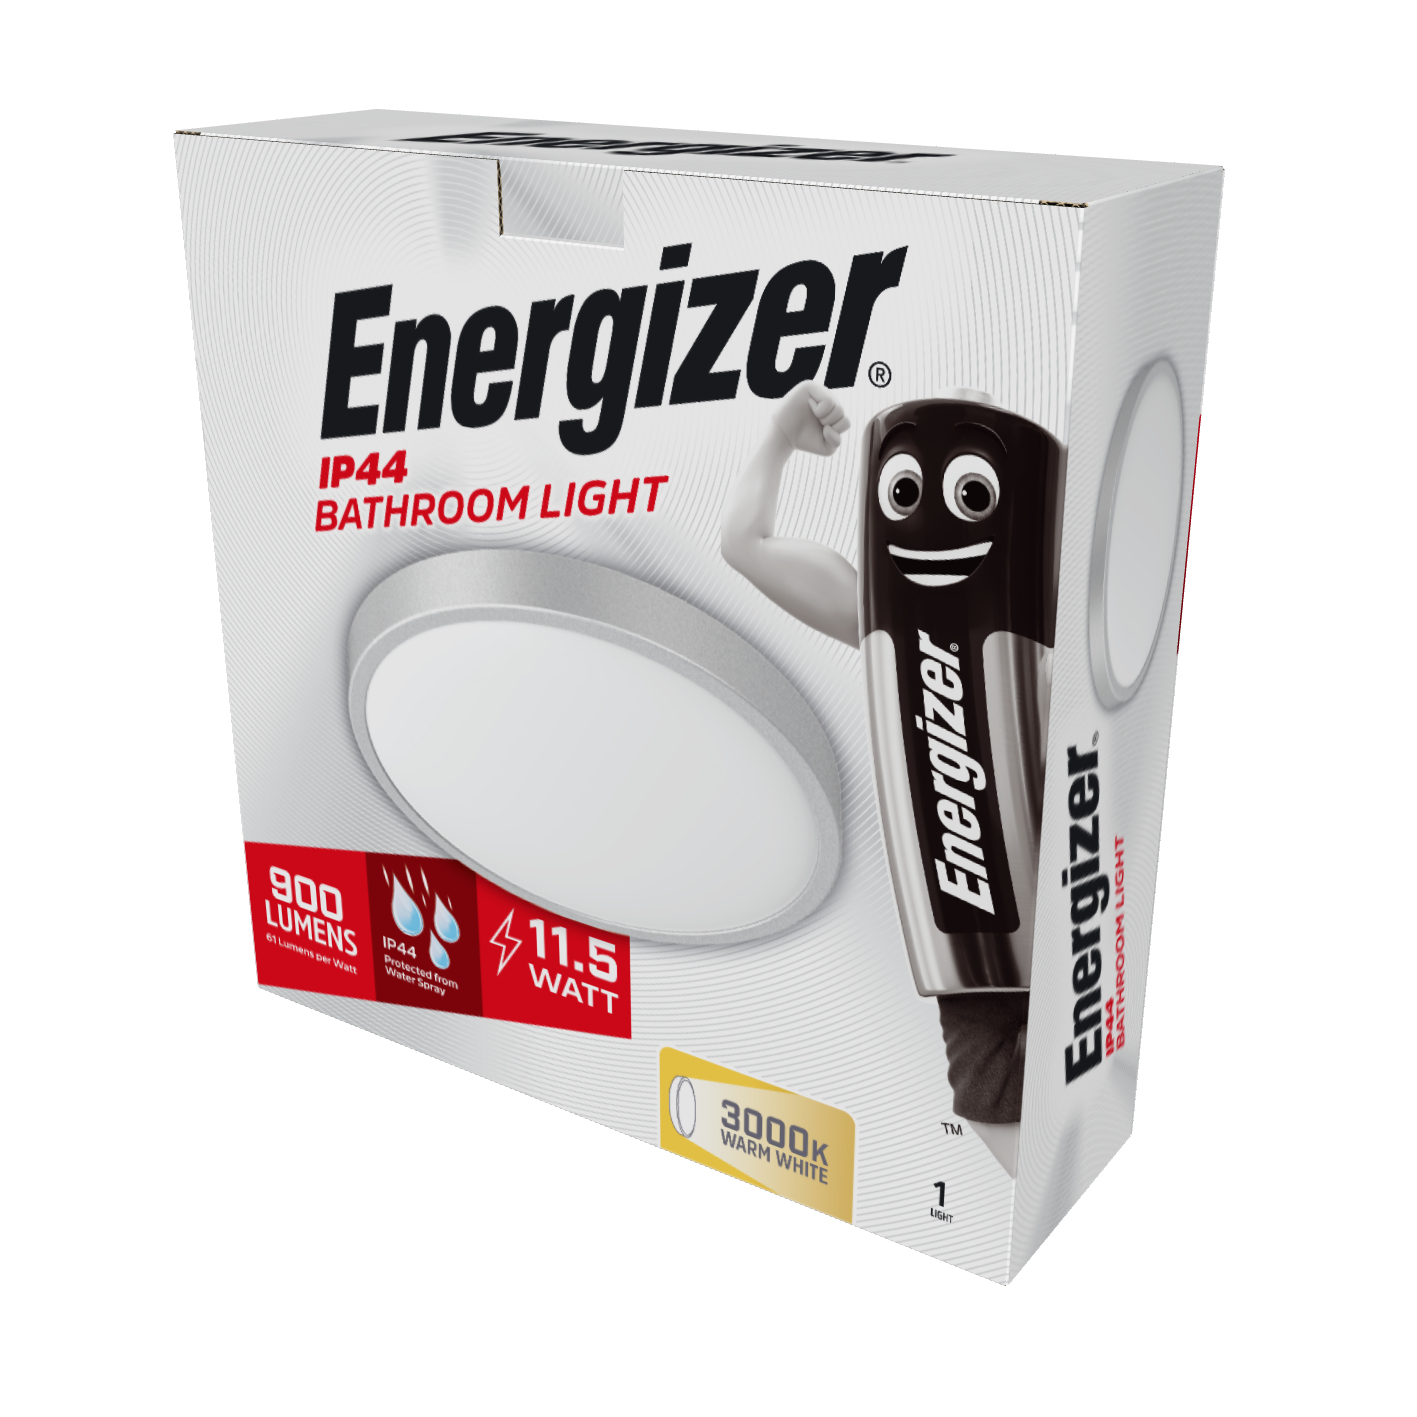 Energizer LED 250mm Bathroom Light - 11.5W - 900 Lumens - 3,000K (Warm White)